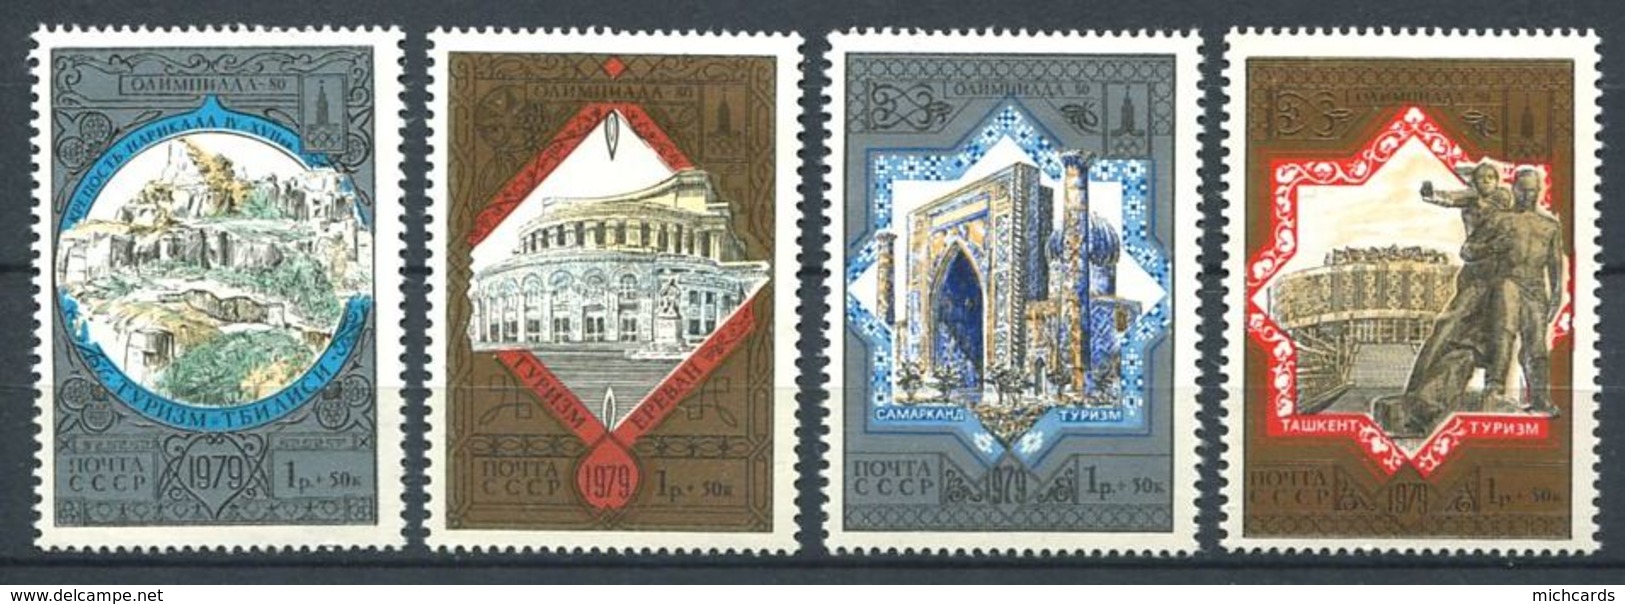 187 RUSSIE (URSS) 1979 - Yvert 4617/20 - Tourisme Armoirie Embleme JO - Neuf ** (MNH) Sans Trace De Charniere - Neufs